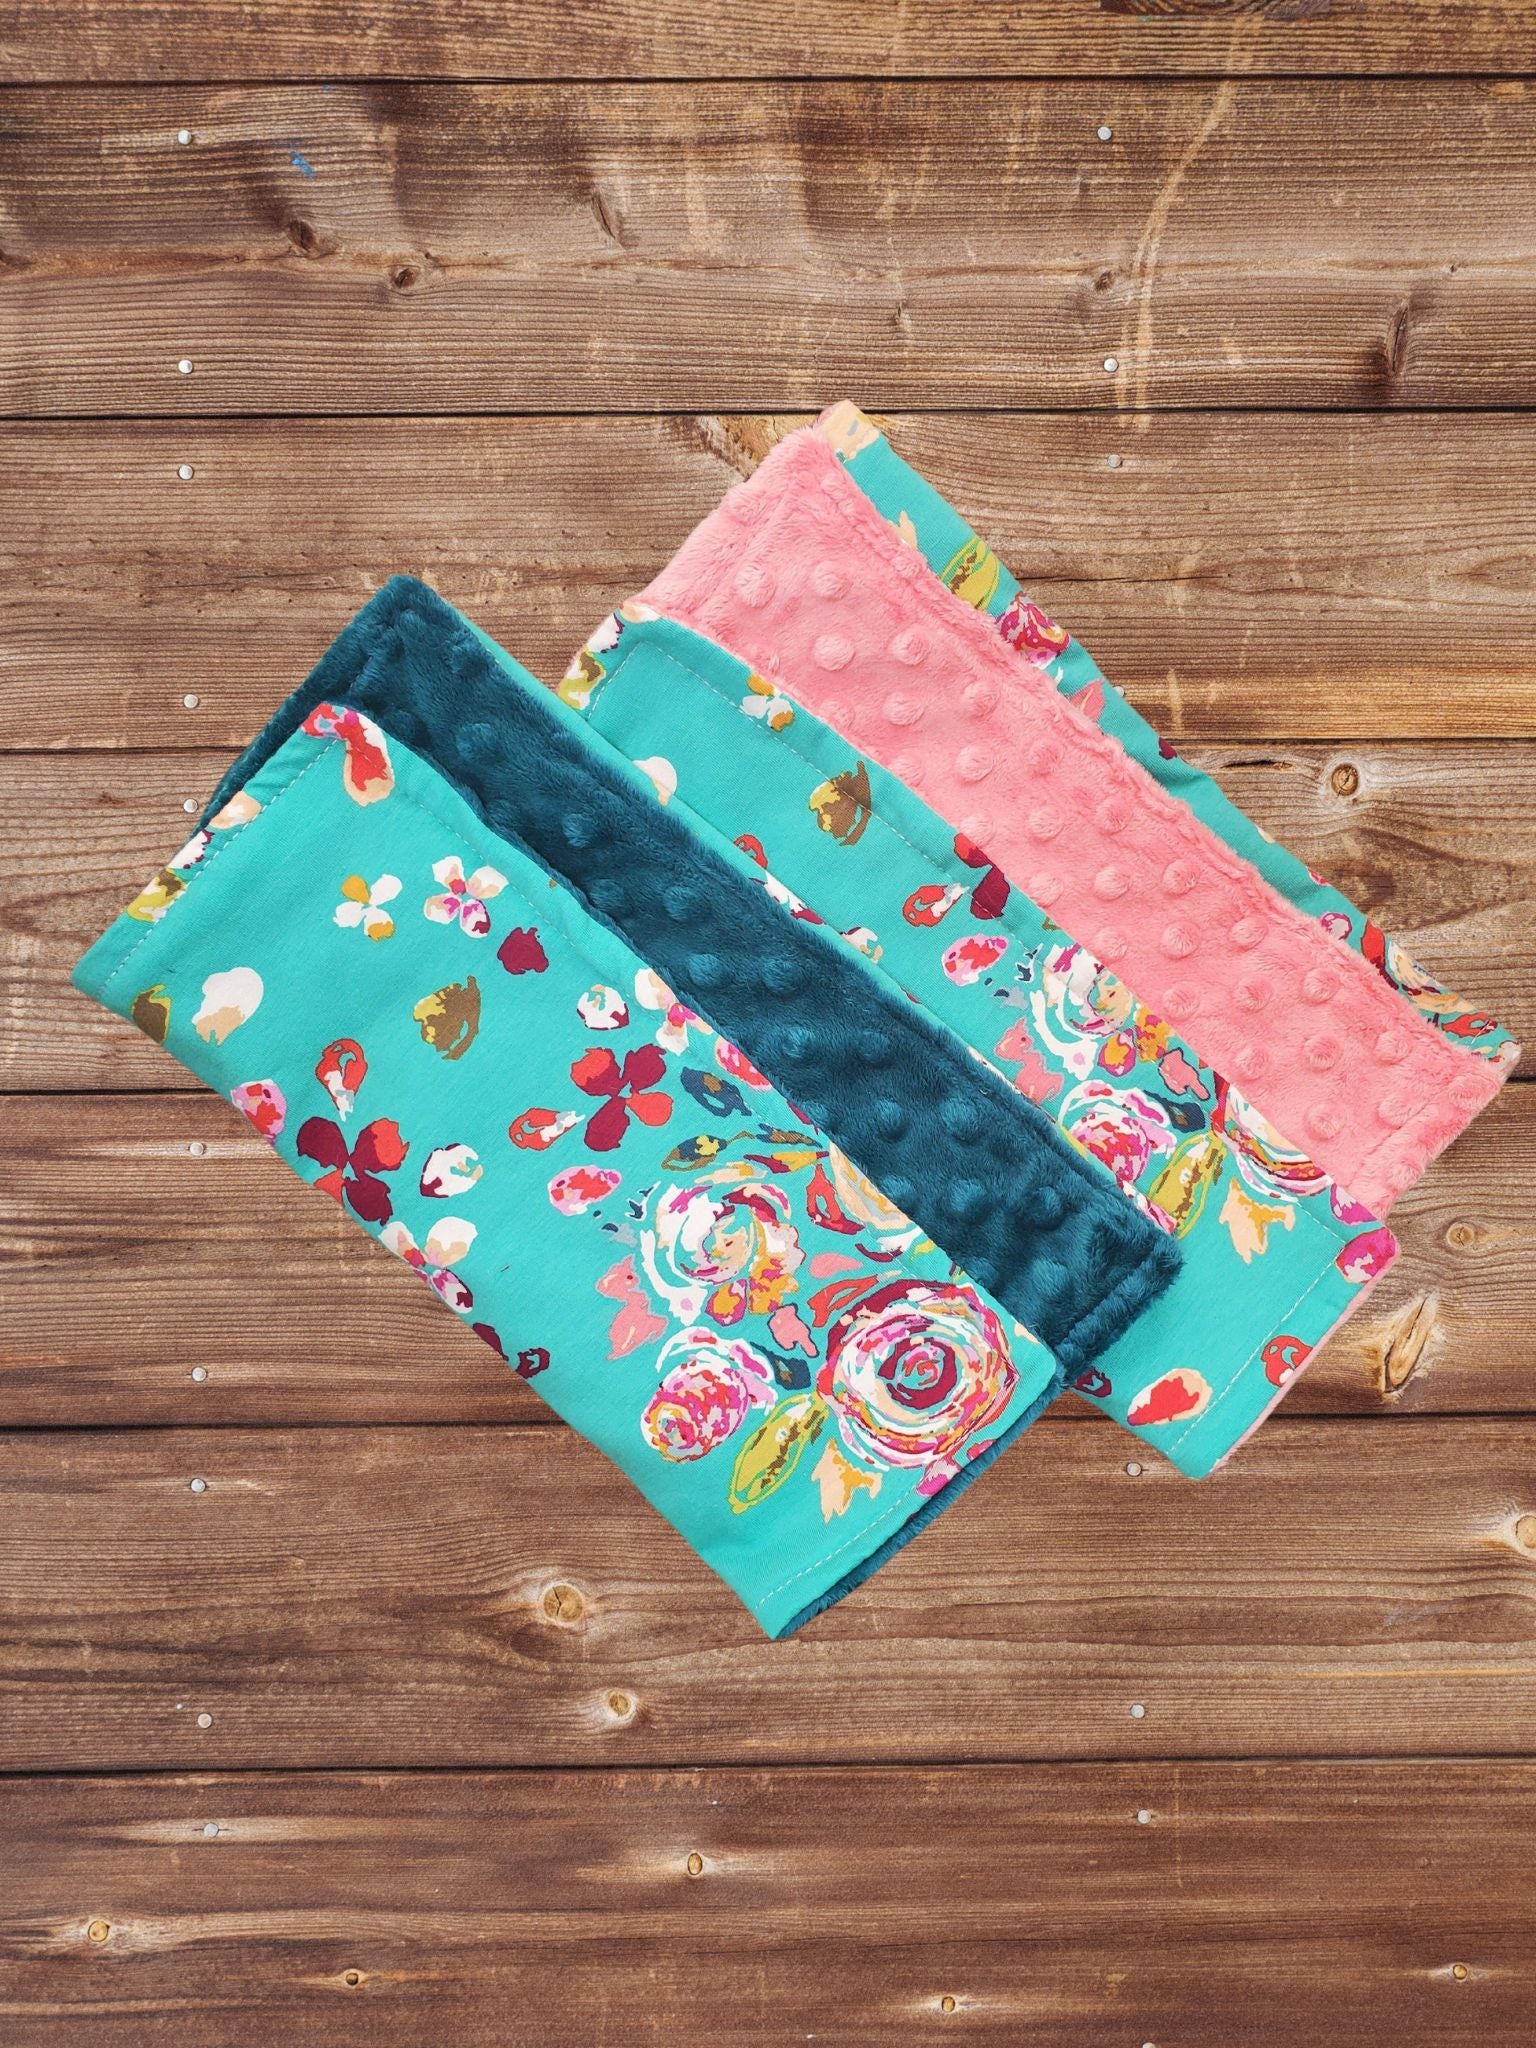 Burp Cloth Set - Teal Floral Burp Cloths - DBC Baby Bedding Co 